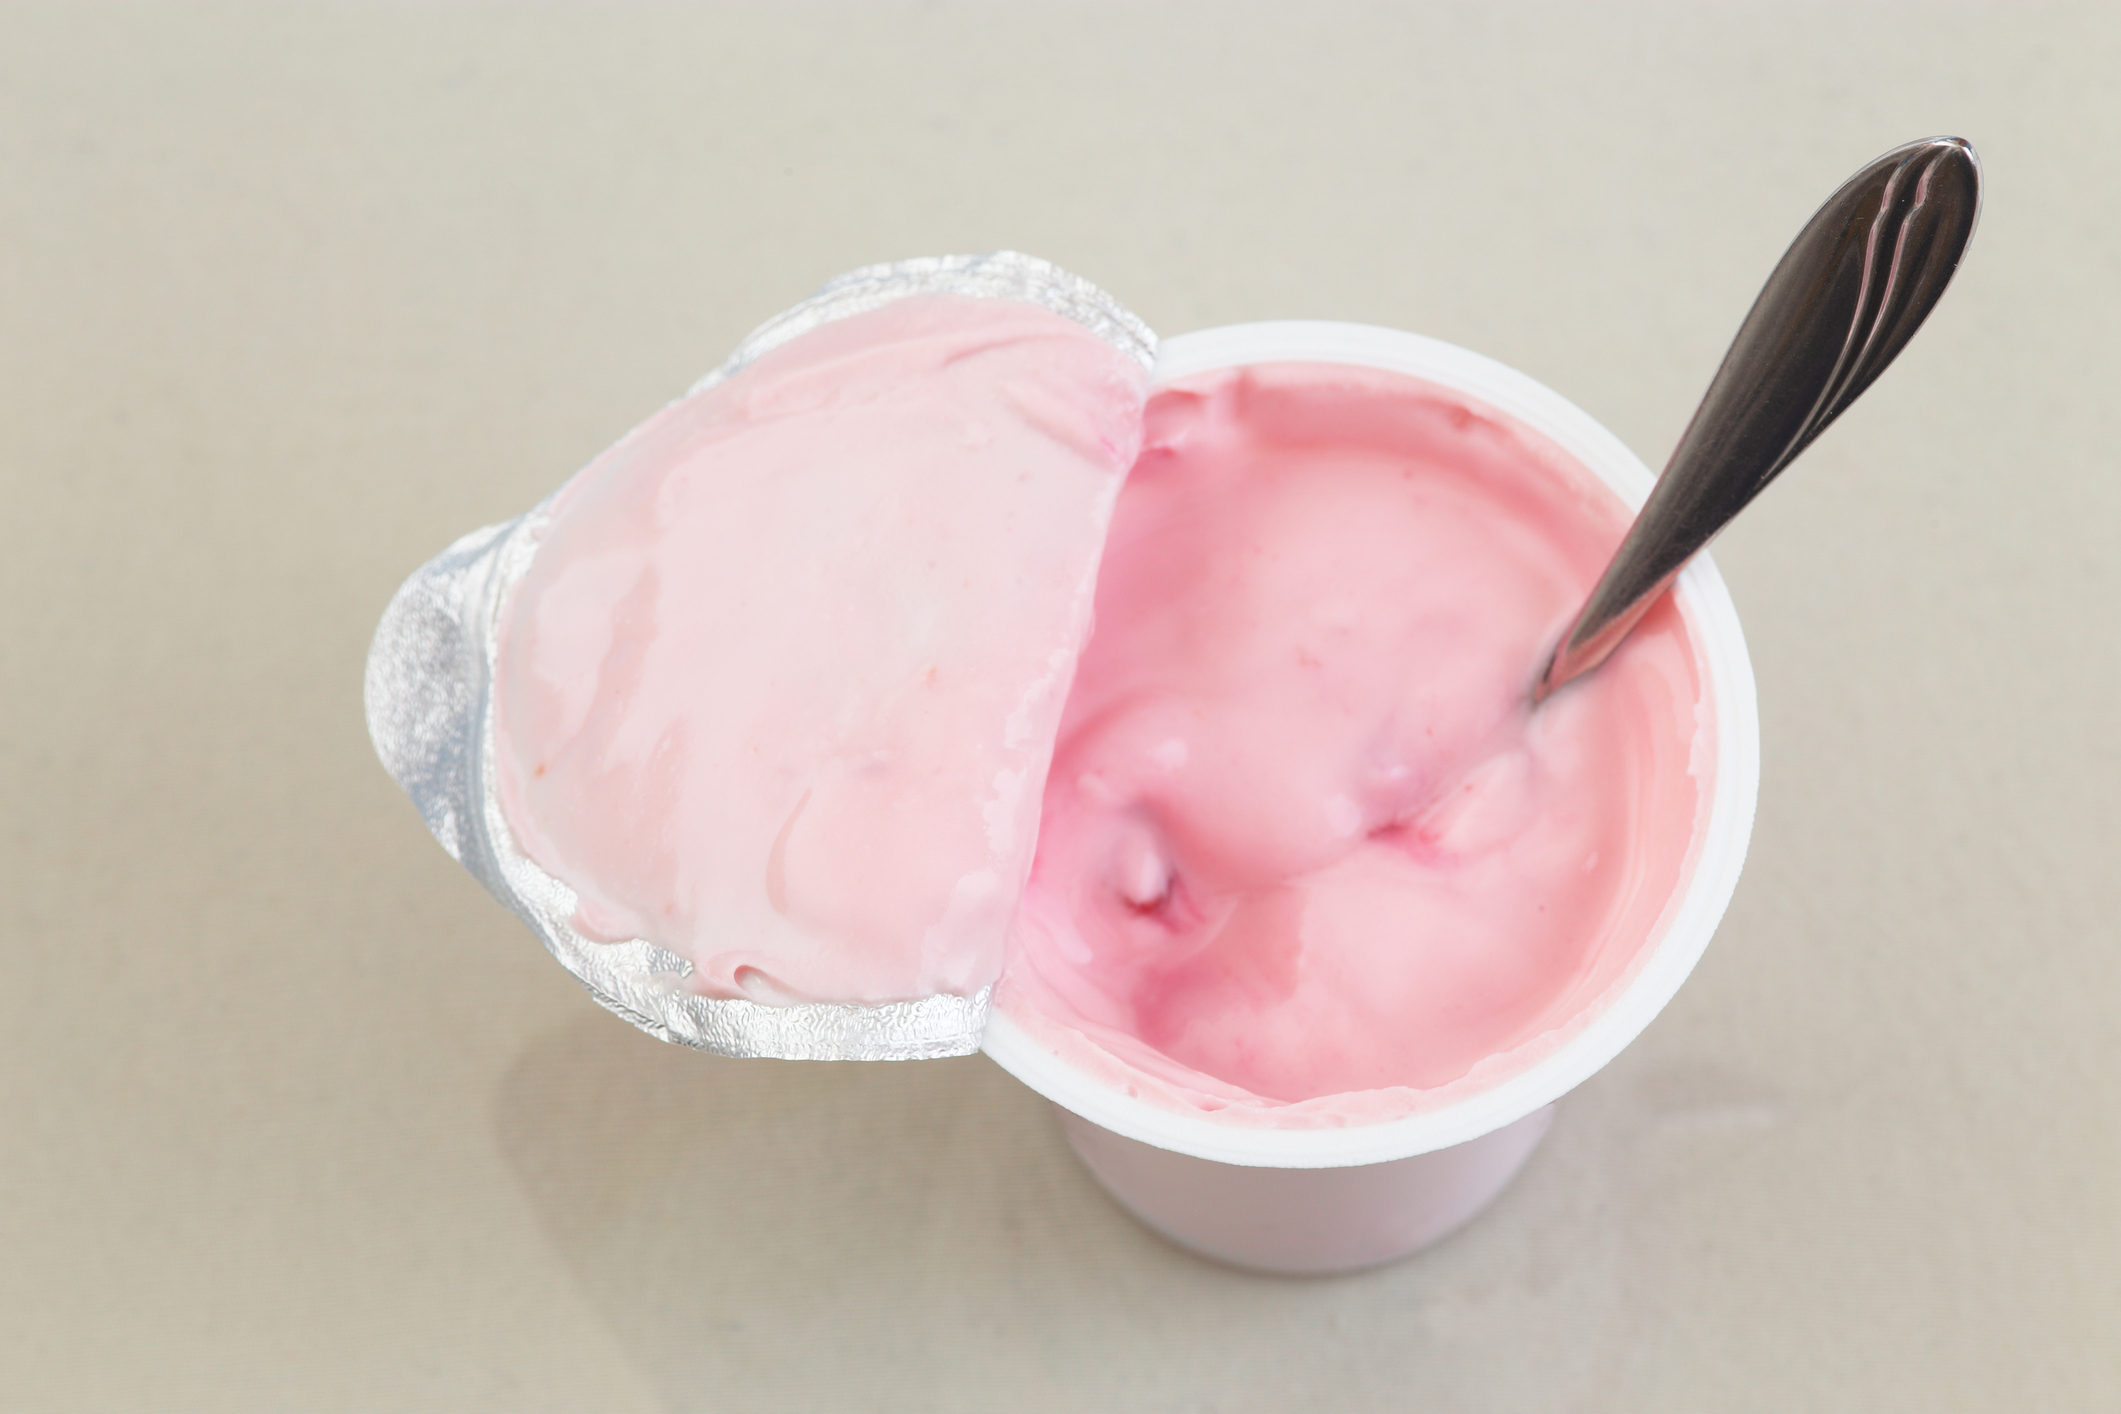 A survey has found some yoghurt has as much sugar as ice cream. Image: Getty